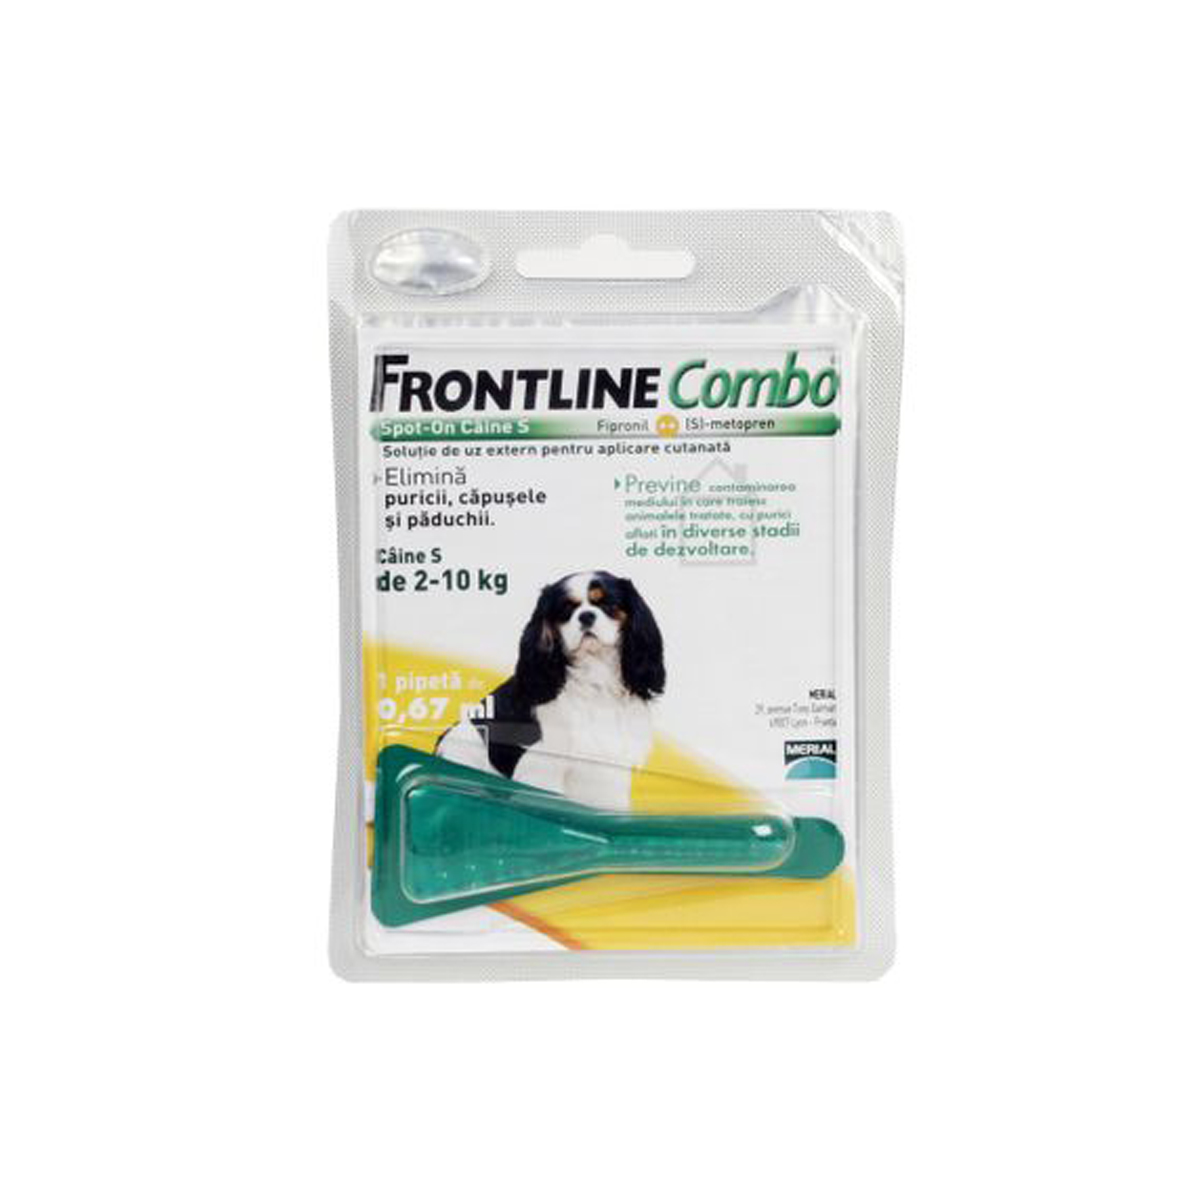 Frontline Combo pentru caini de talie mica 2-10kg, 3 pipete antiparazitare, Antiparazitare externe, Antiparazitare, Câini 